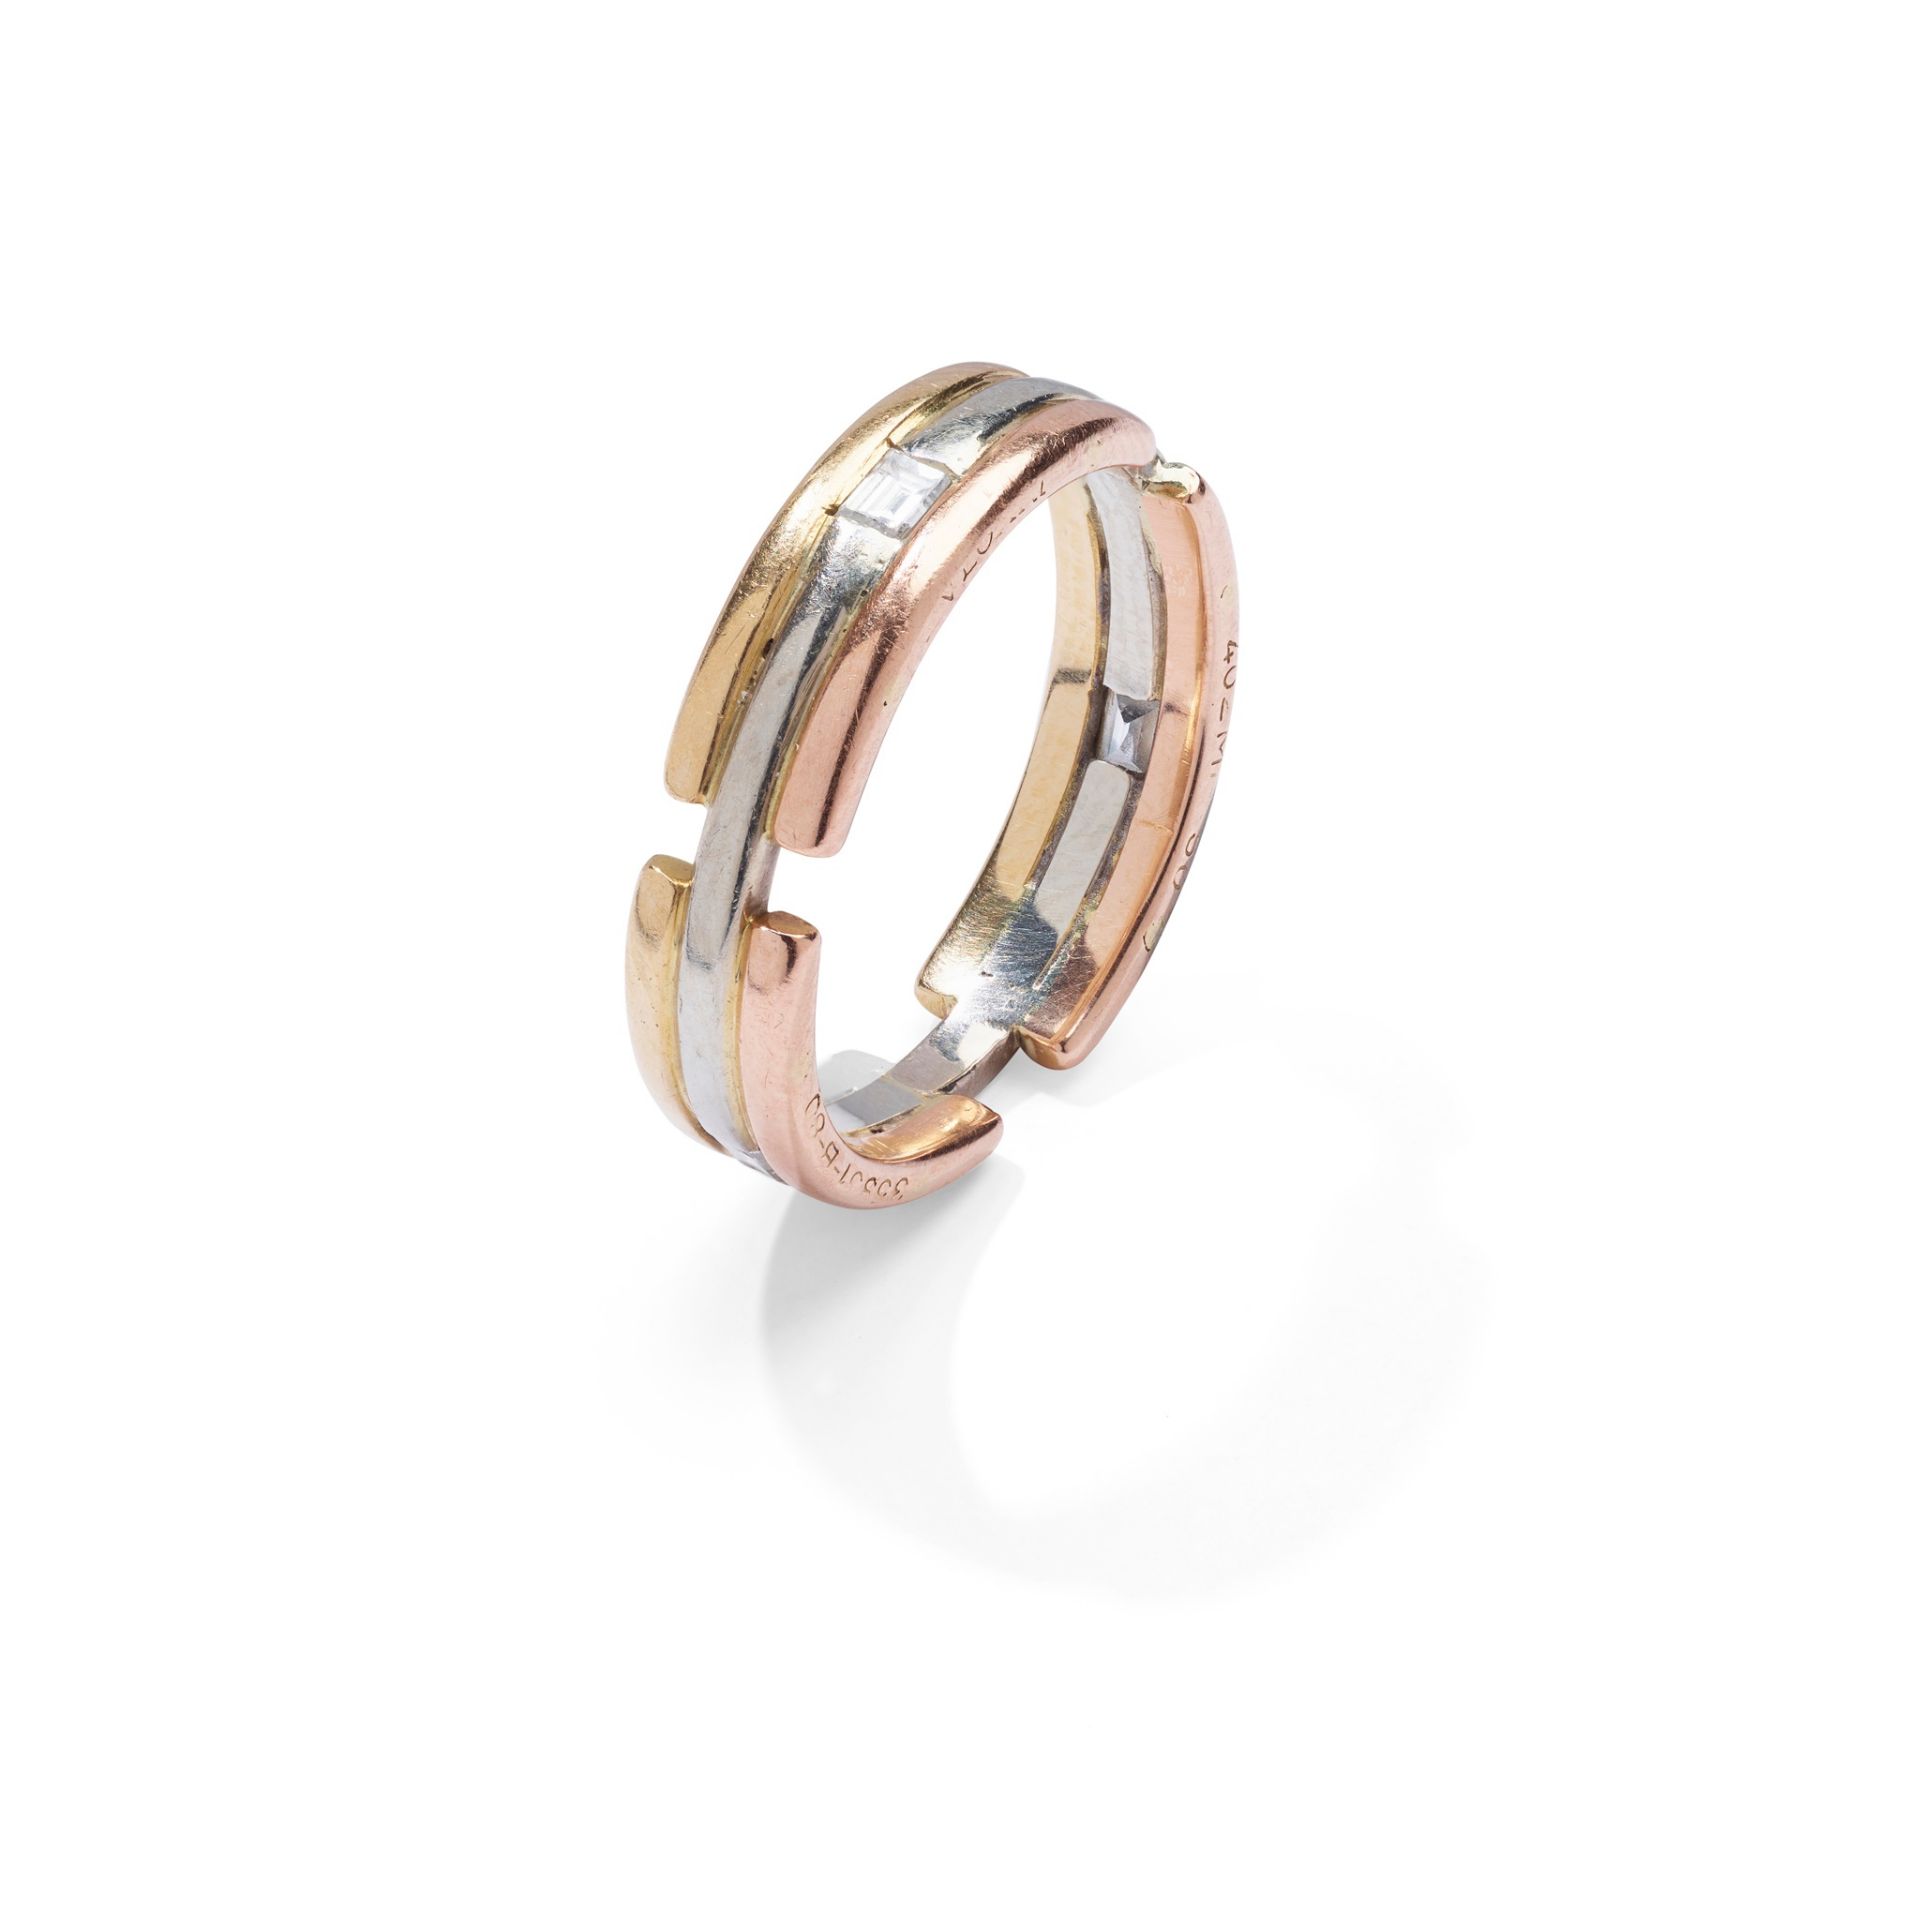 A diamond-set tri-coloured ring, by Bulgari